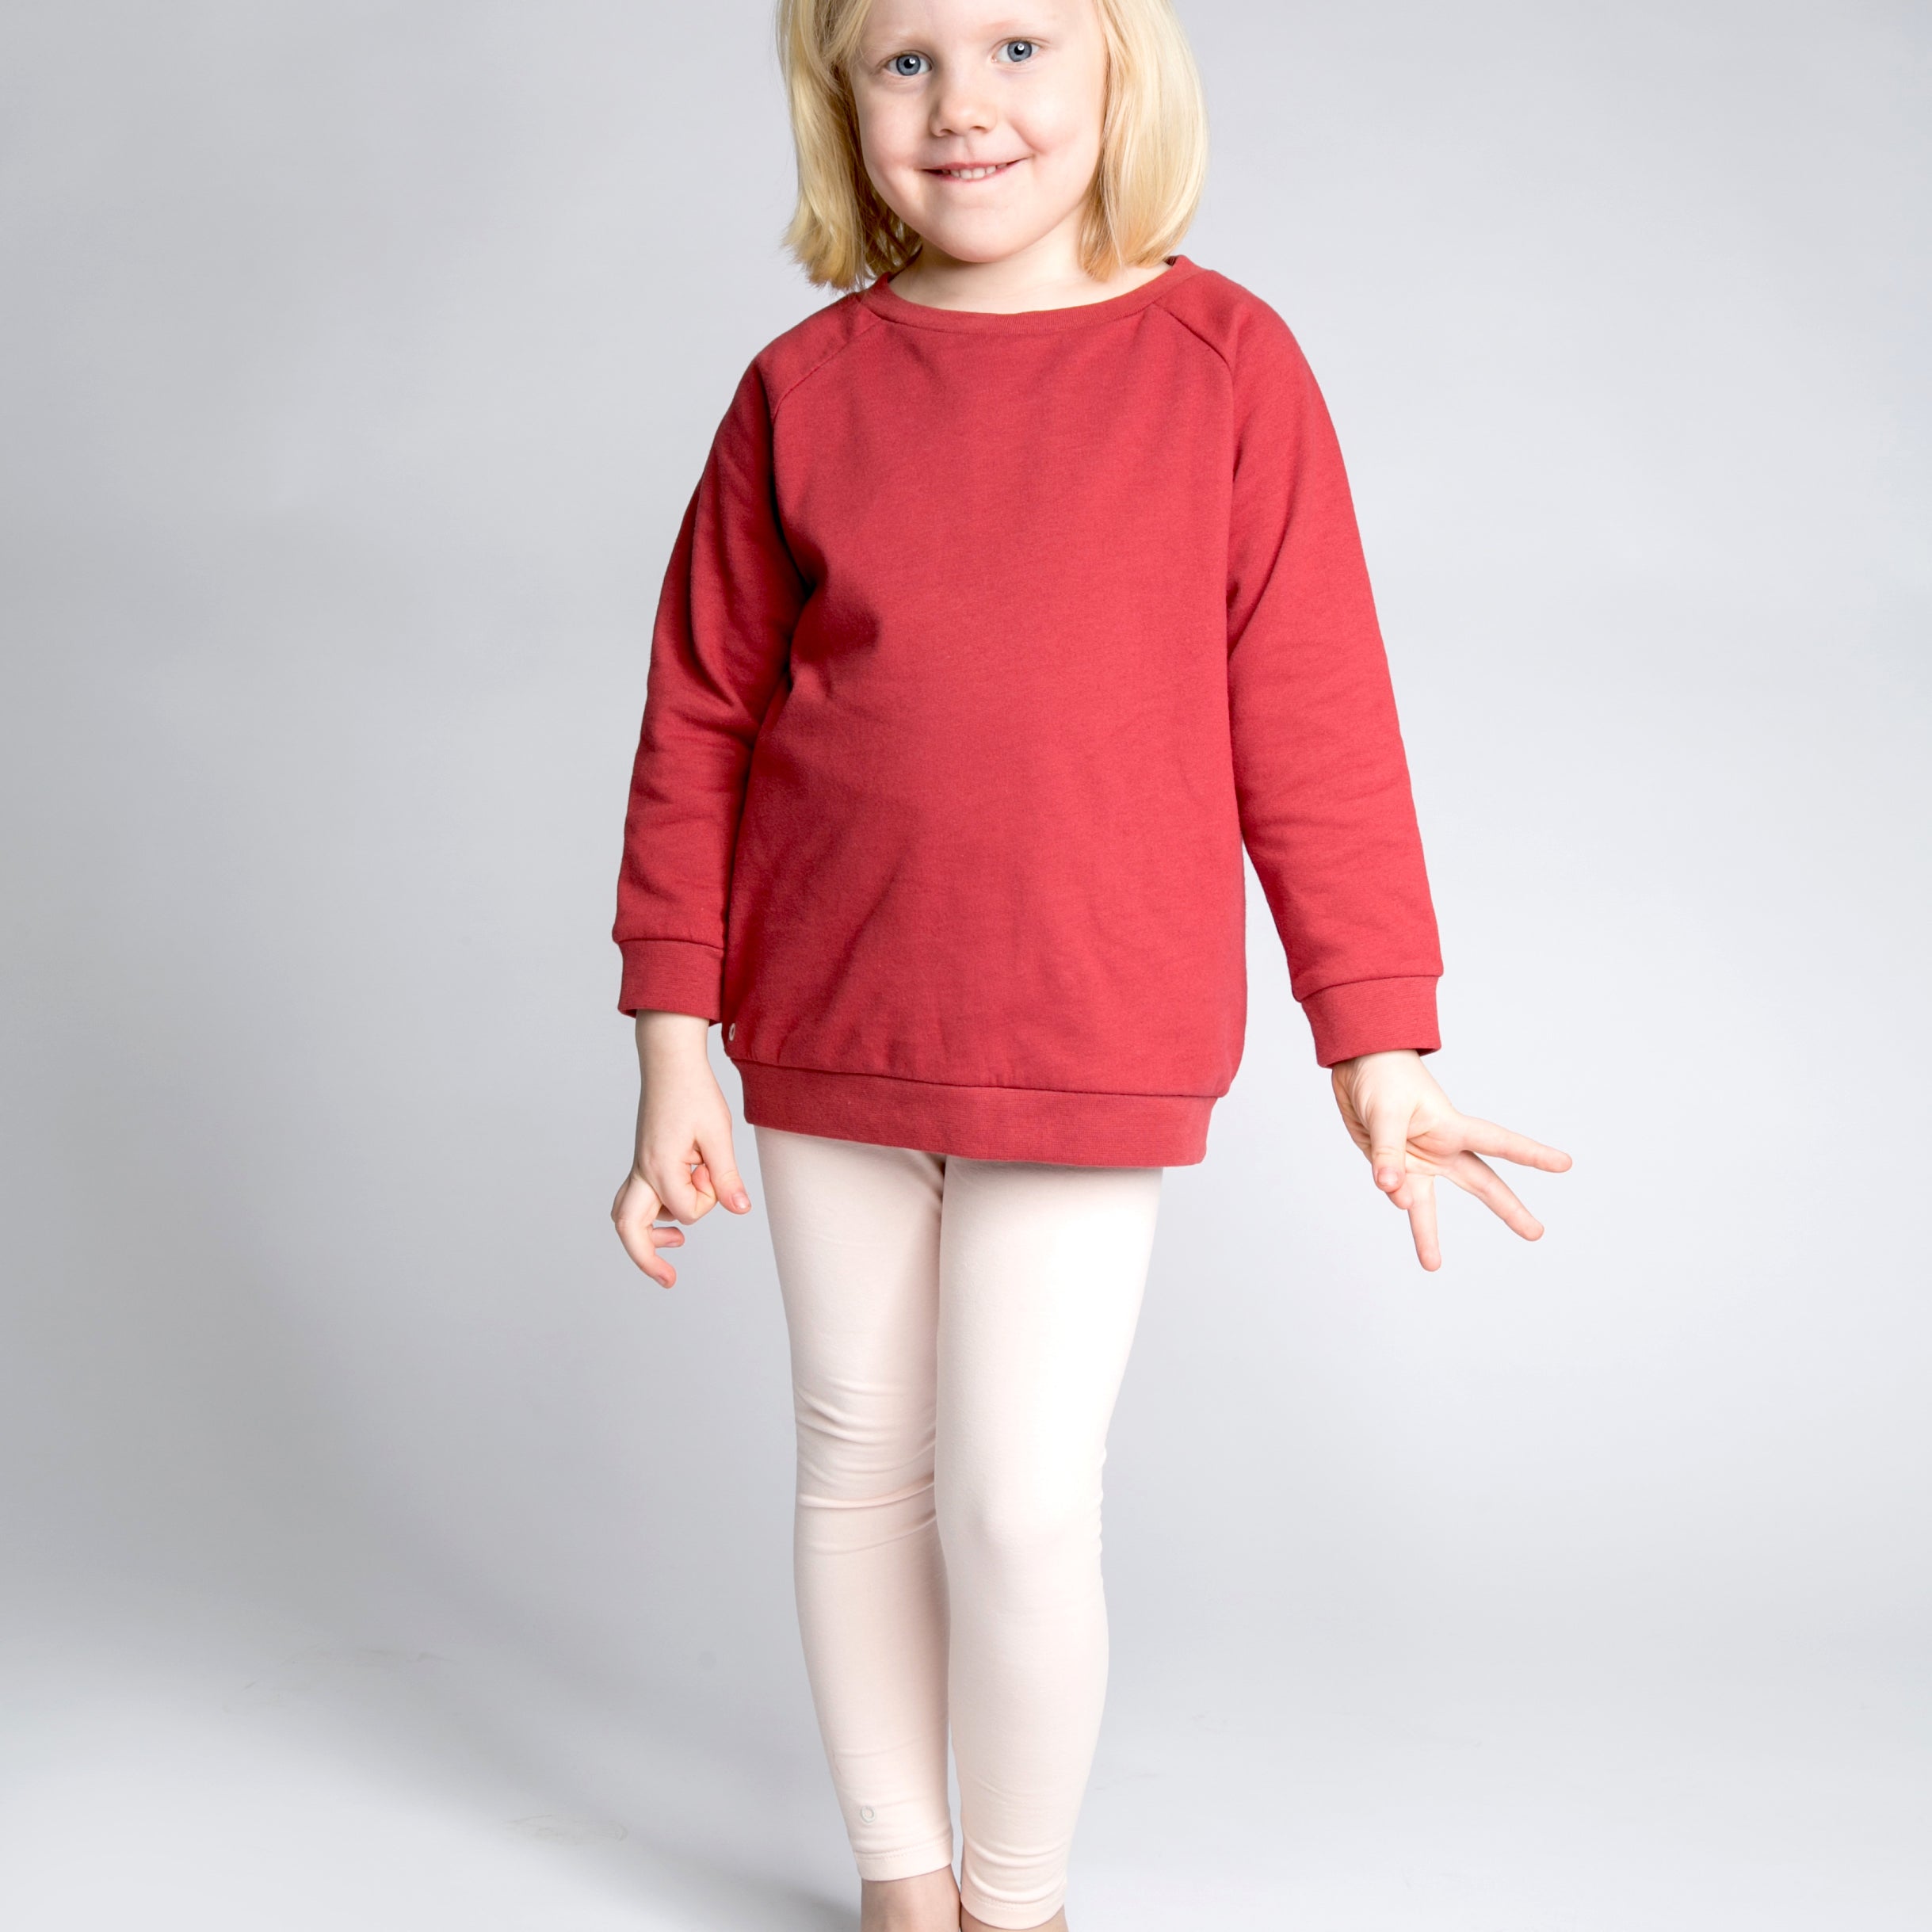 HeyJune Concept Store - 🌿 ORBASICS - Sweater aus Bio Baumwolle in pomegranate